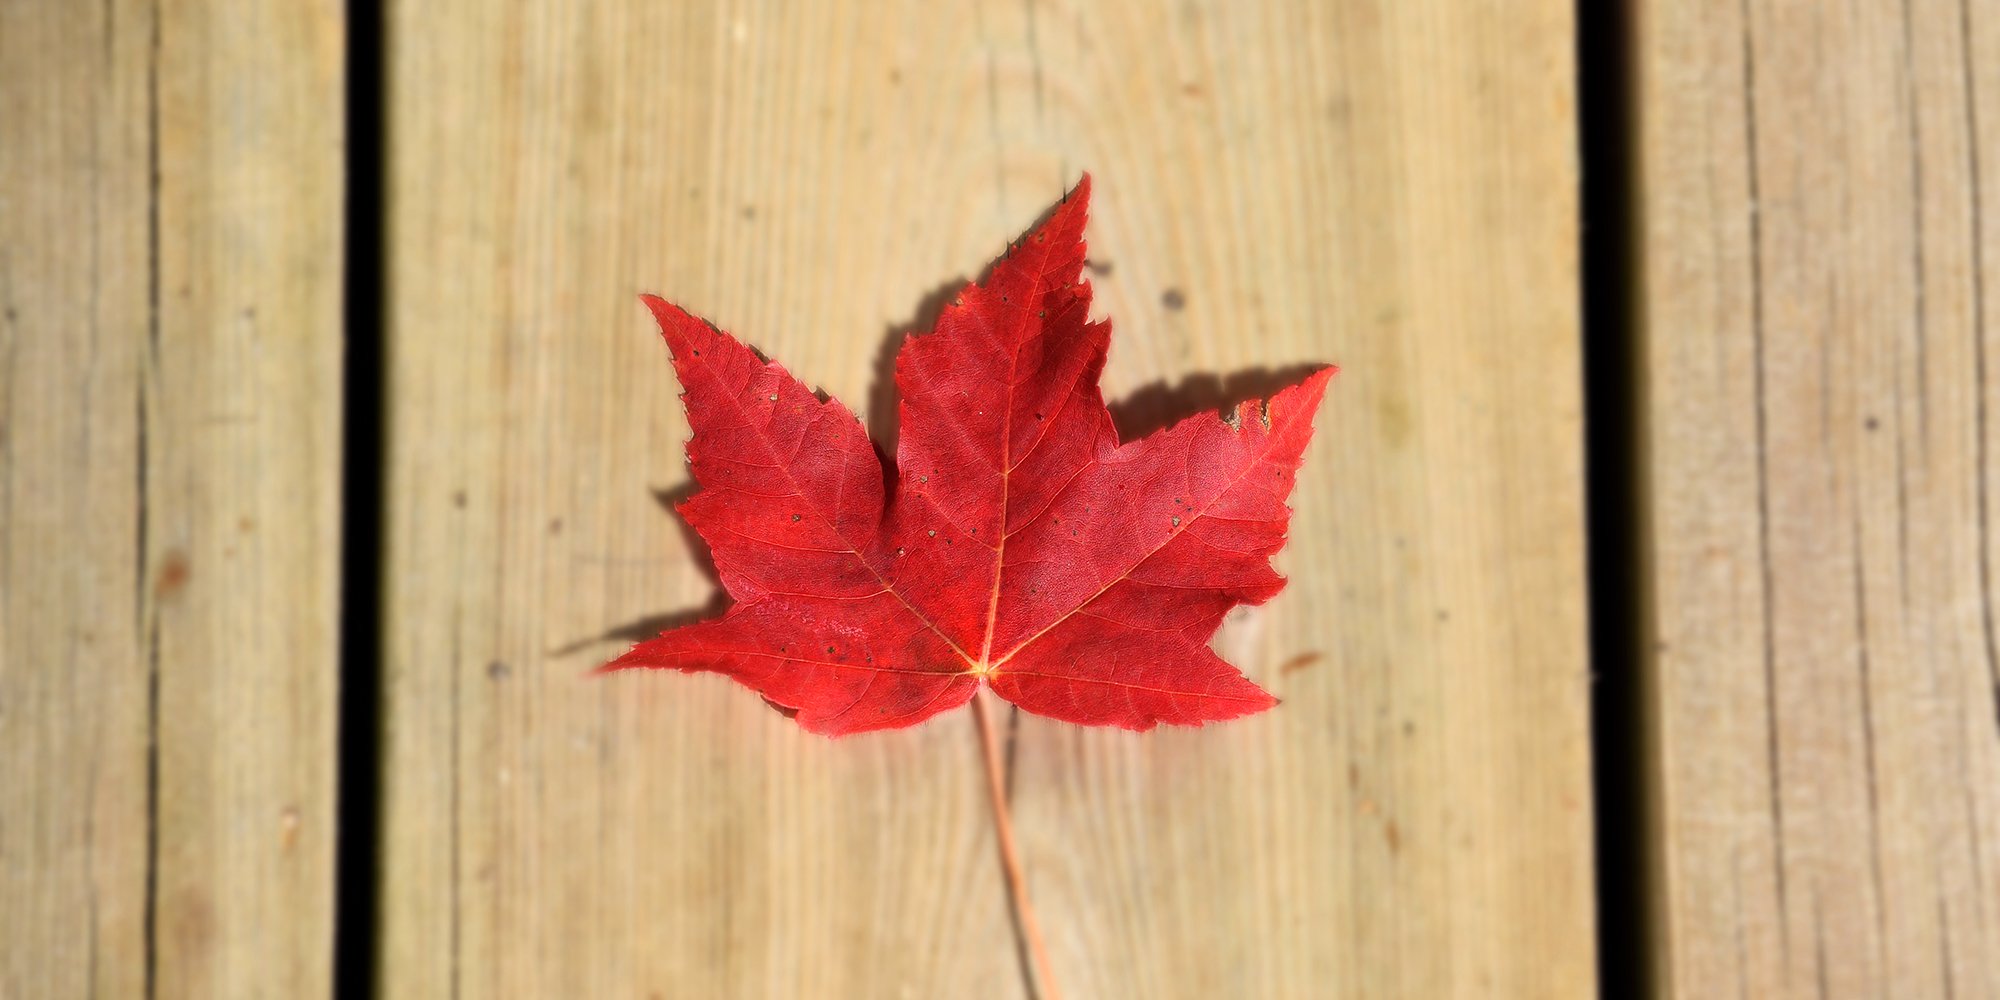 red maple leaf on wood deck